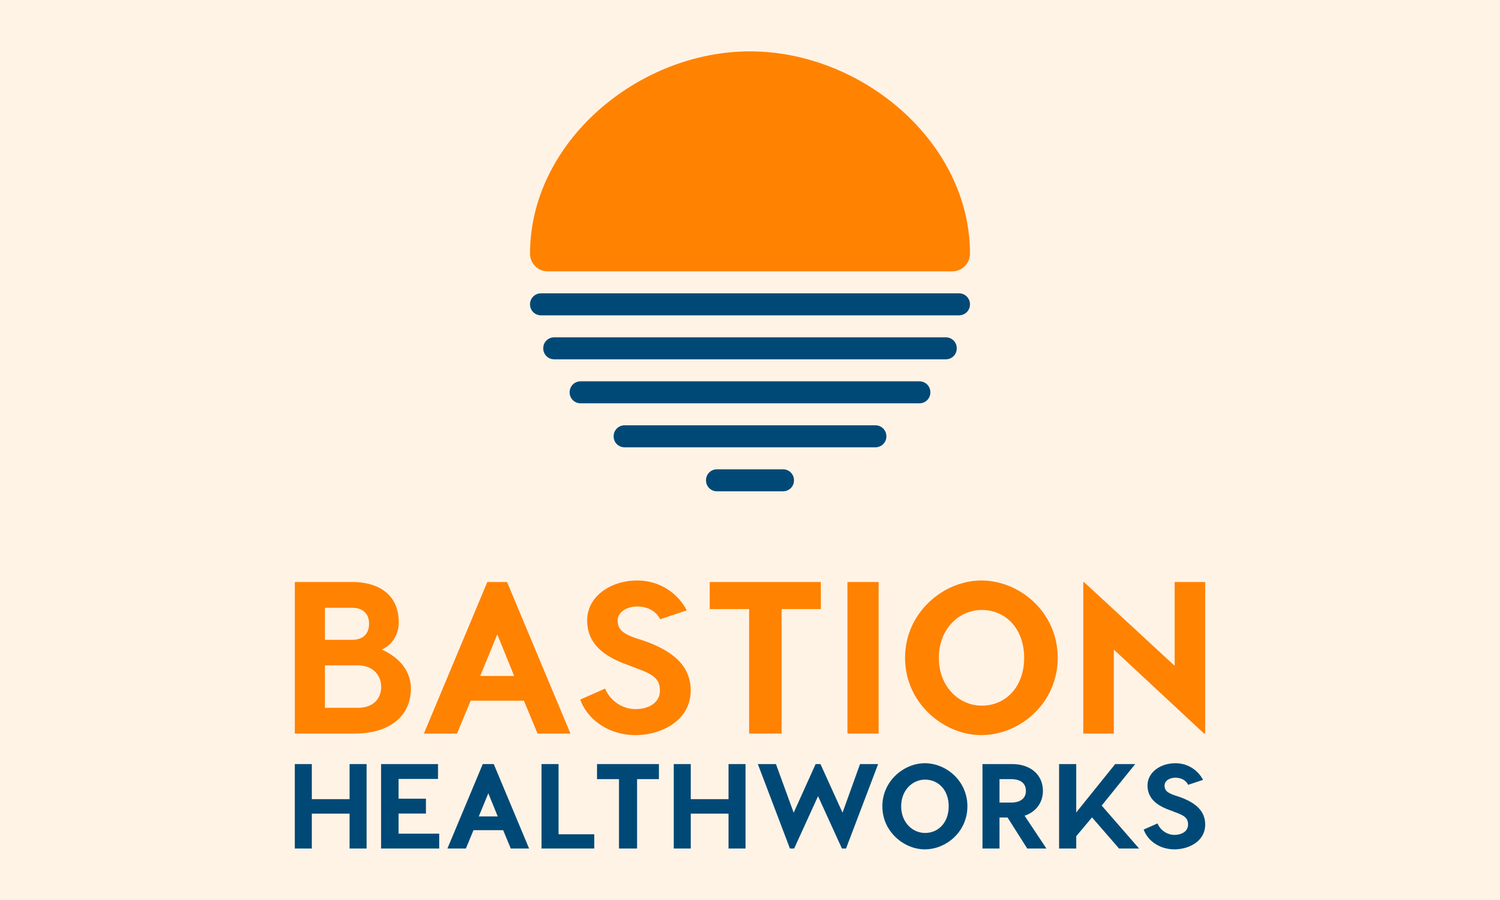 Bastion Healthworks